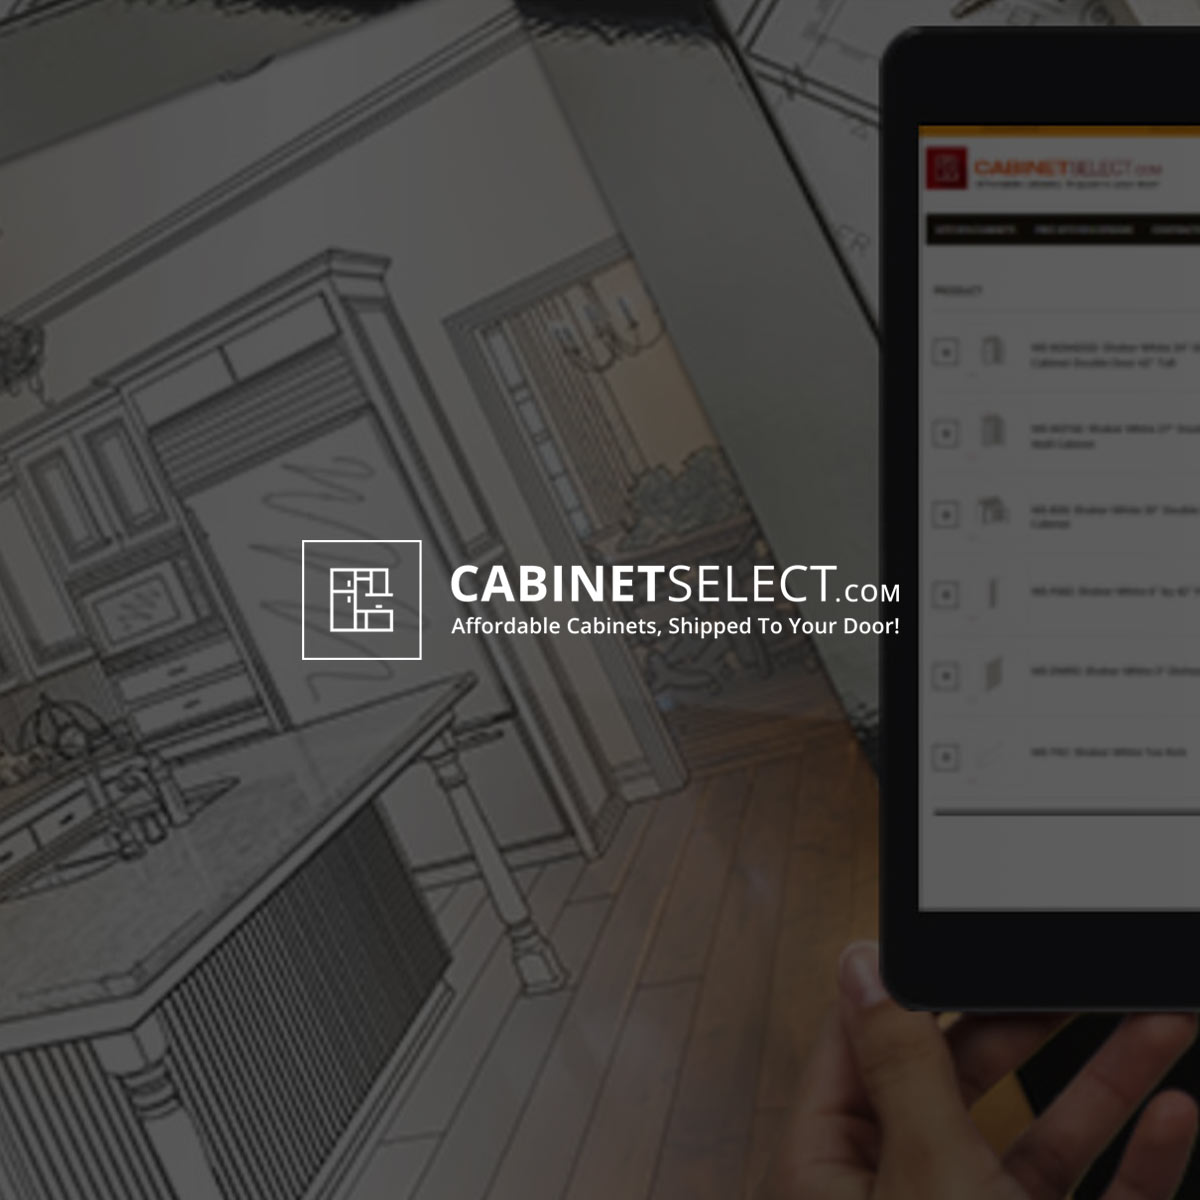 CabinetSelect: Woocommerce Web Design and Development